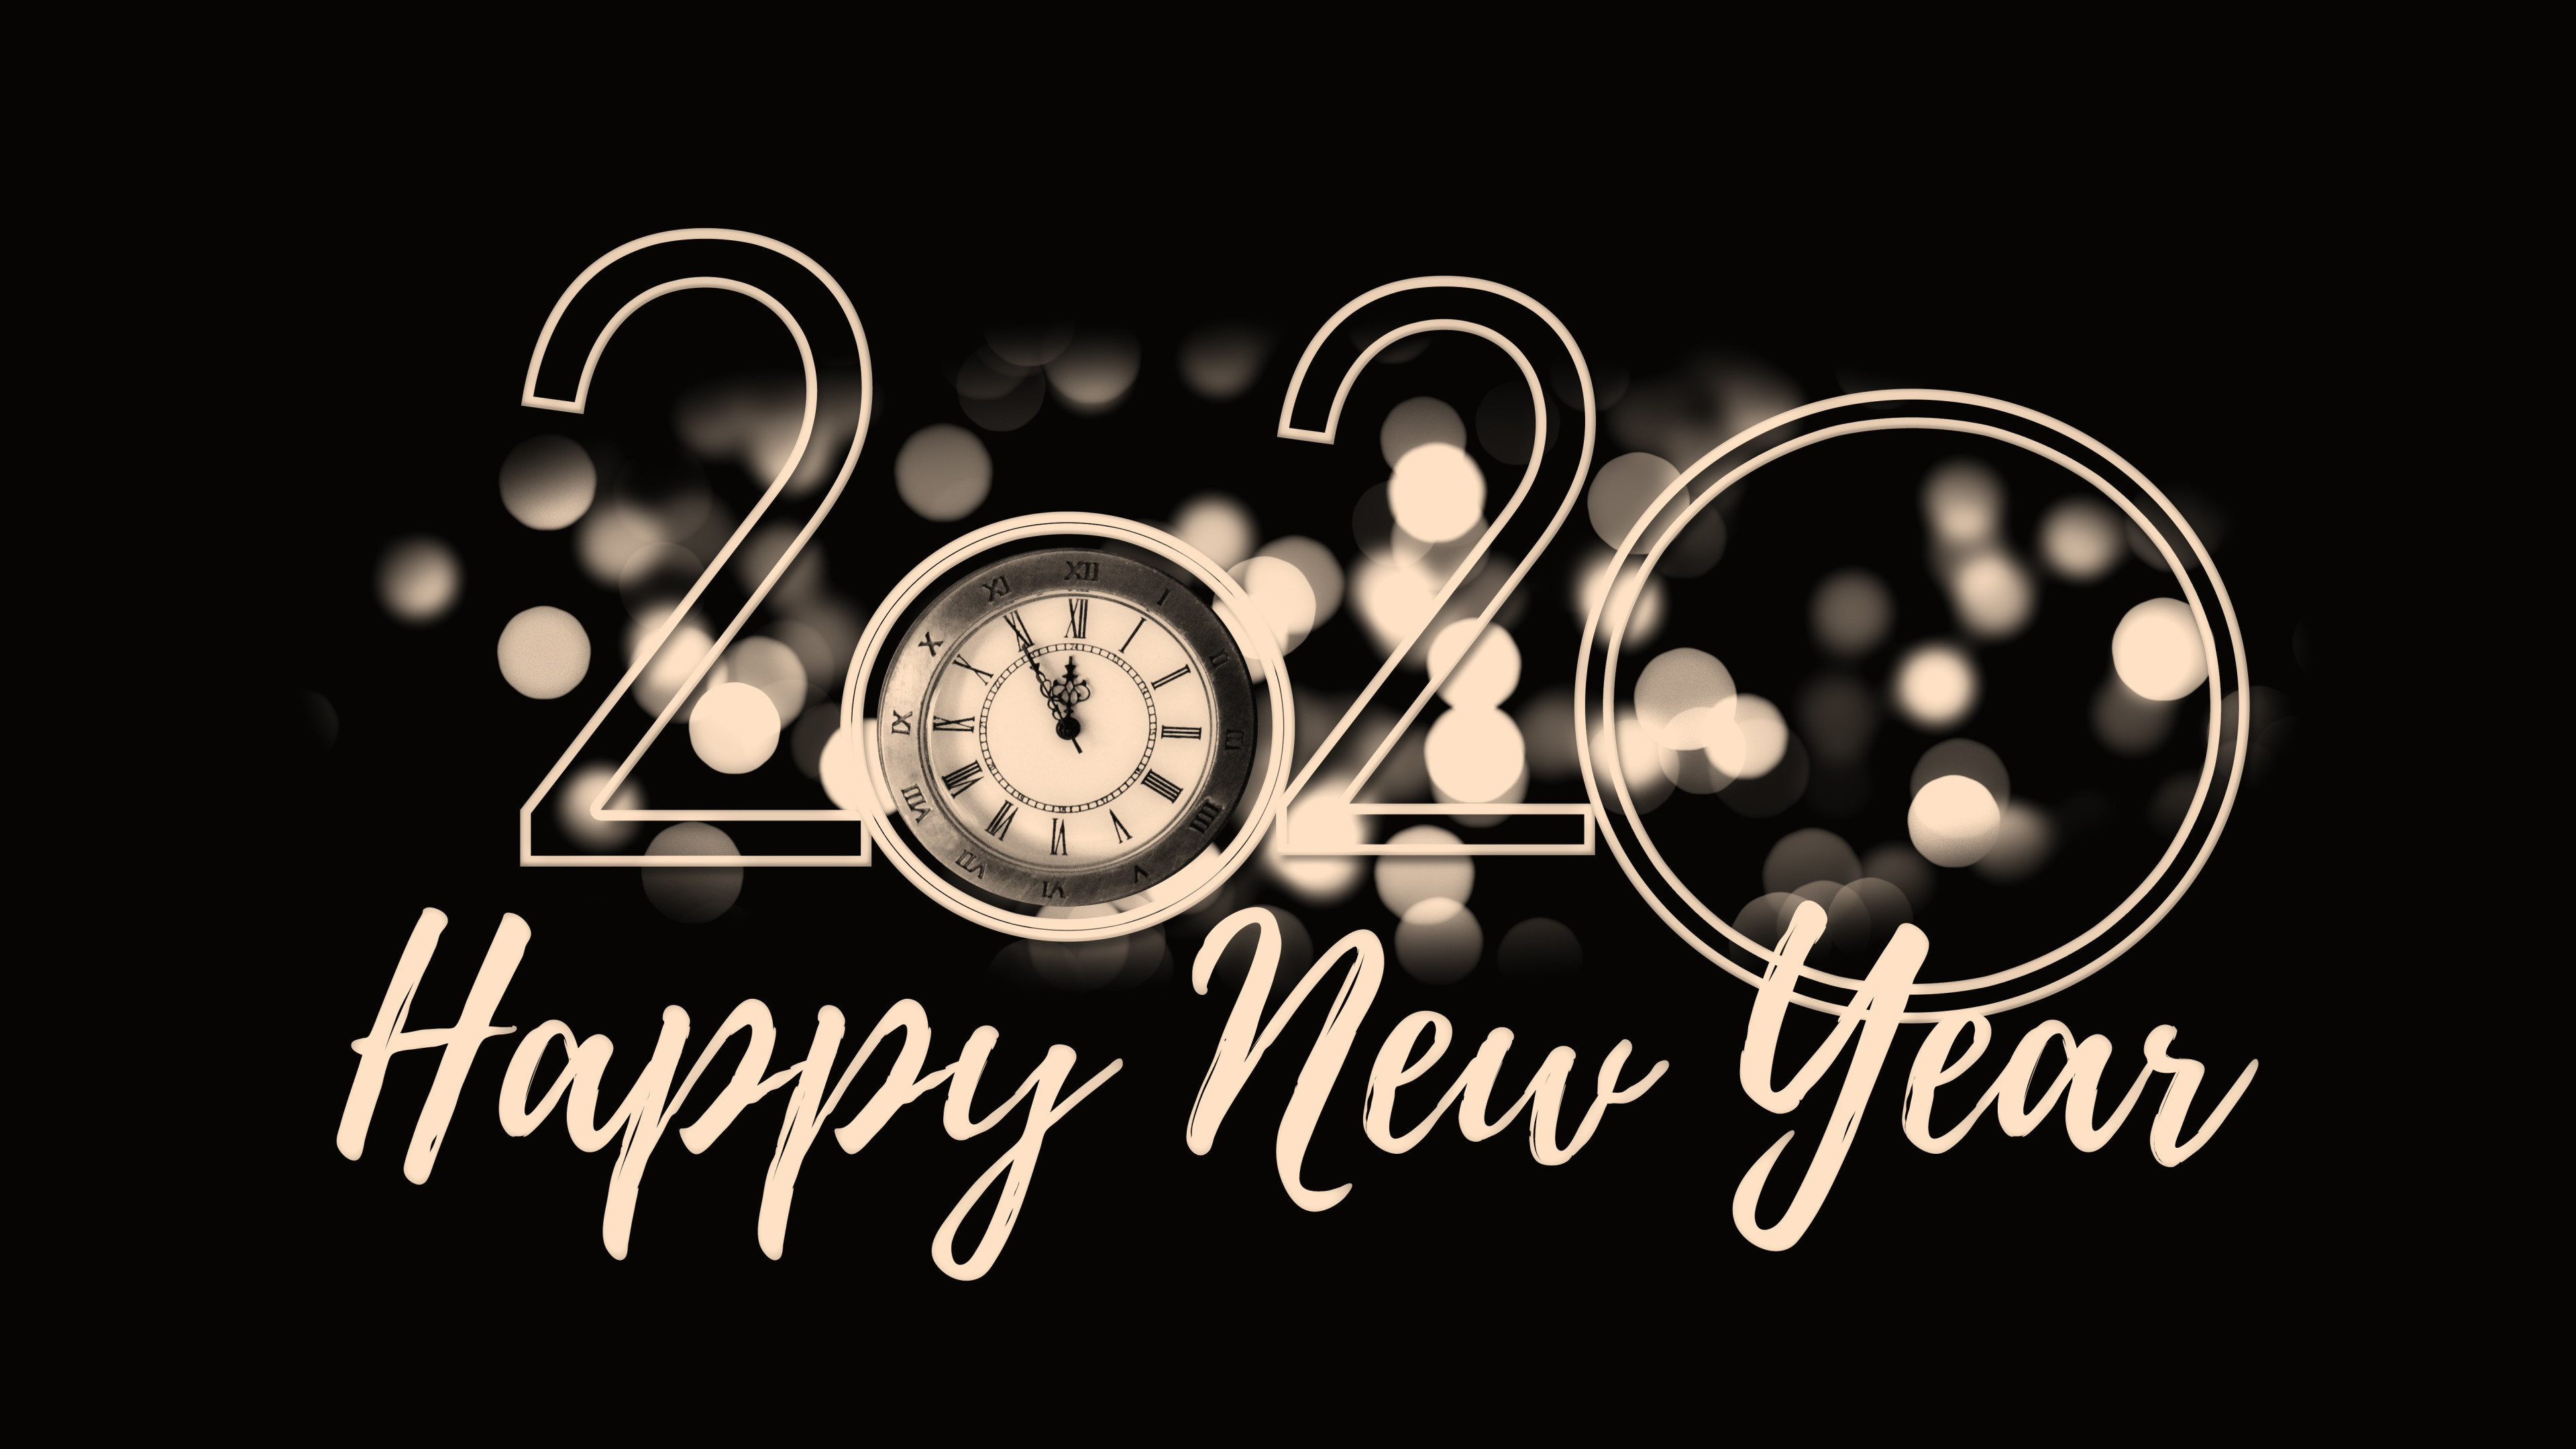 2020 Happy New Year wallpaper 3840x2160